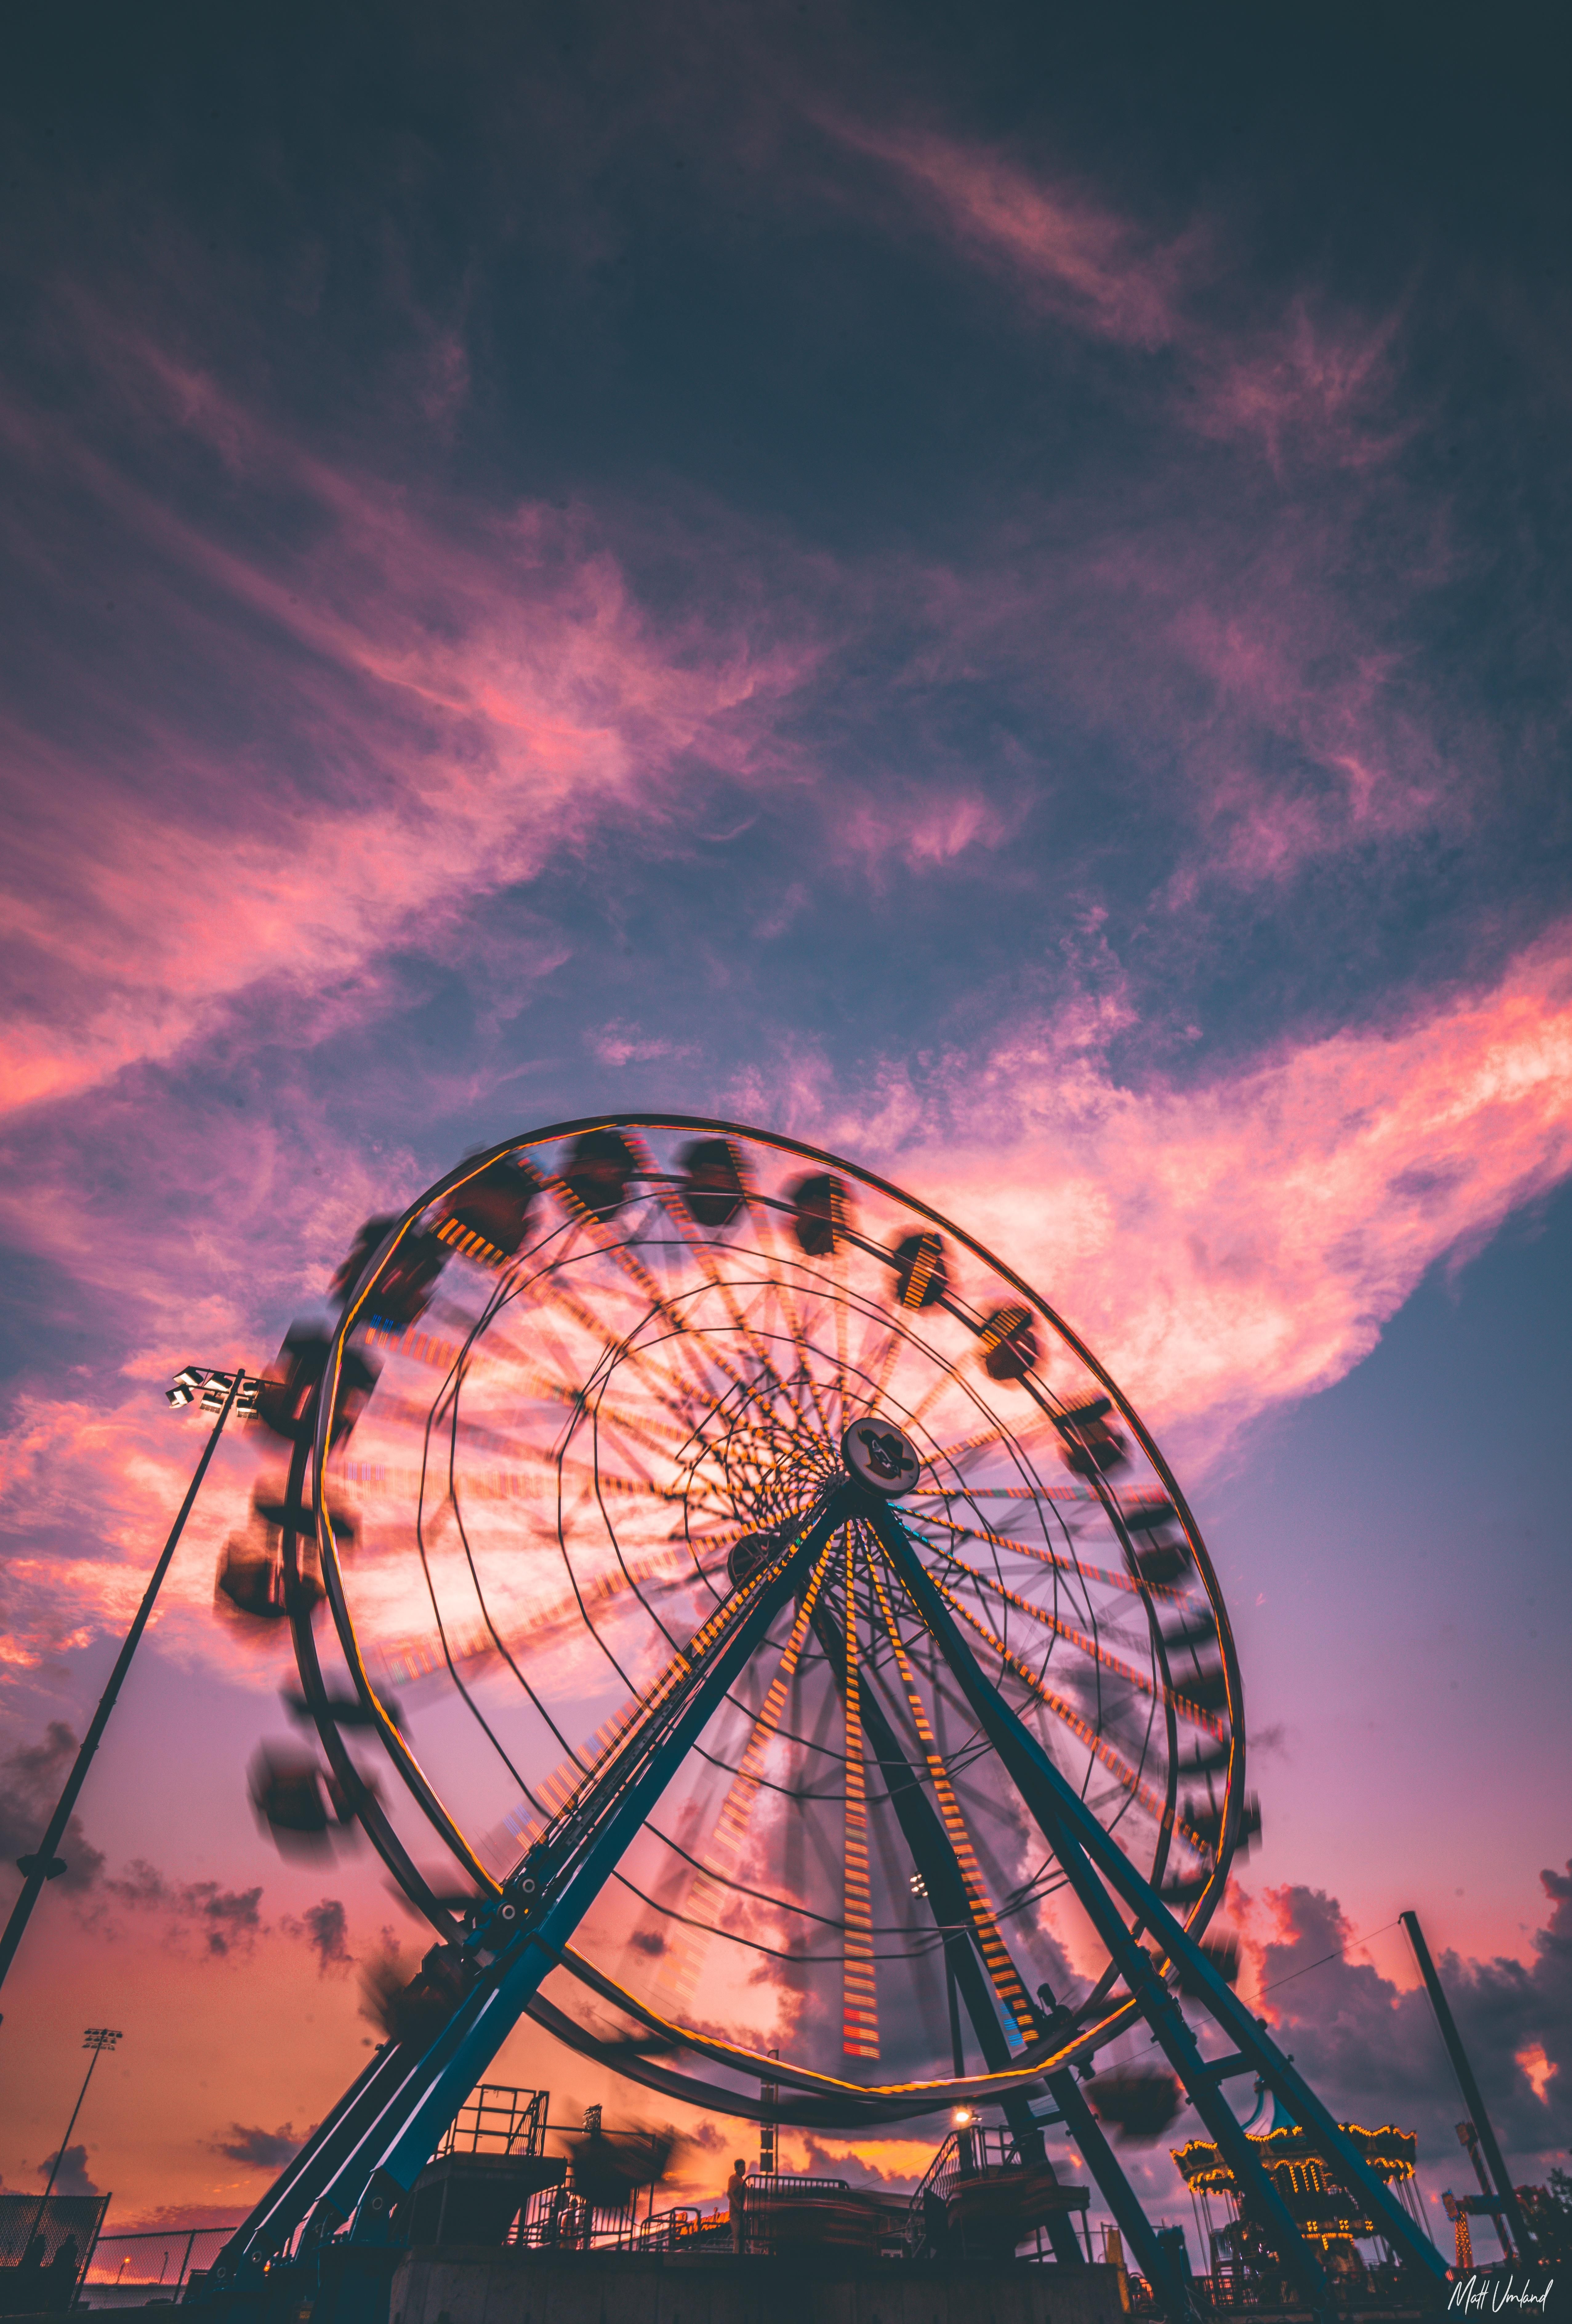  Karneval Hintergrundbild 5107x7552. ITAP of a ferris wheel at sunset. Dönme dolap, Soyut manzara, Lunapark